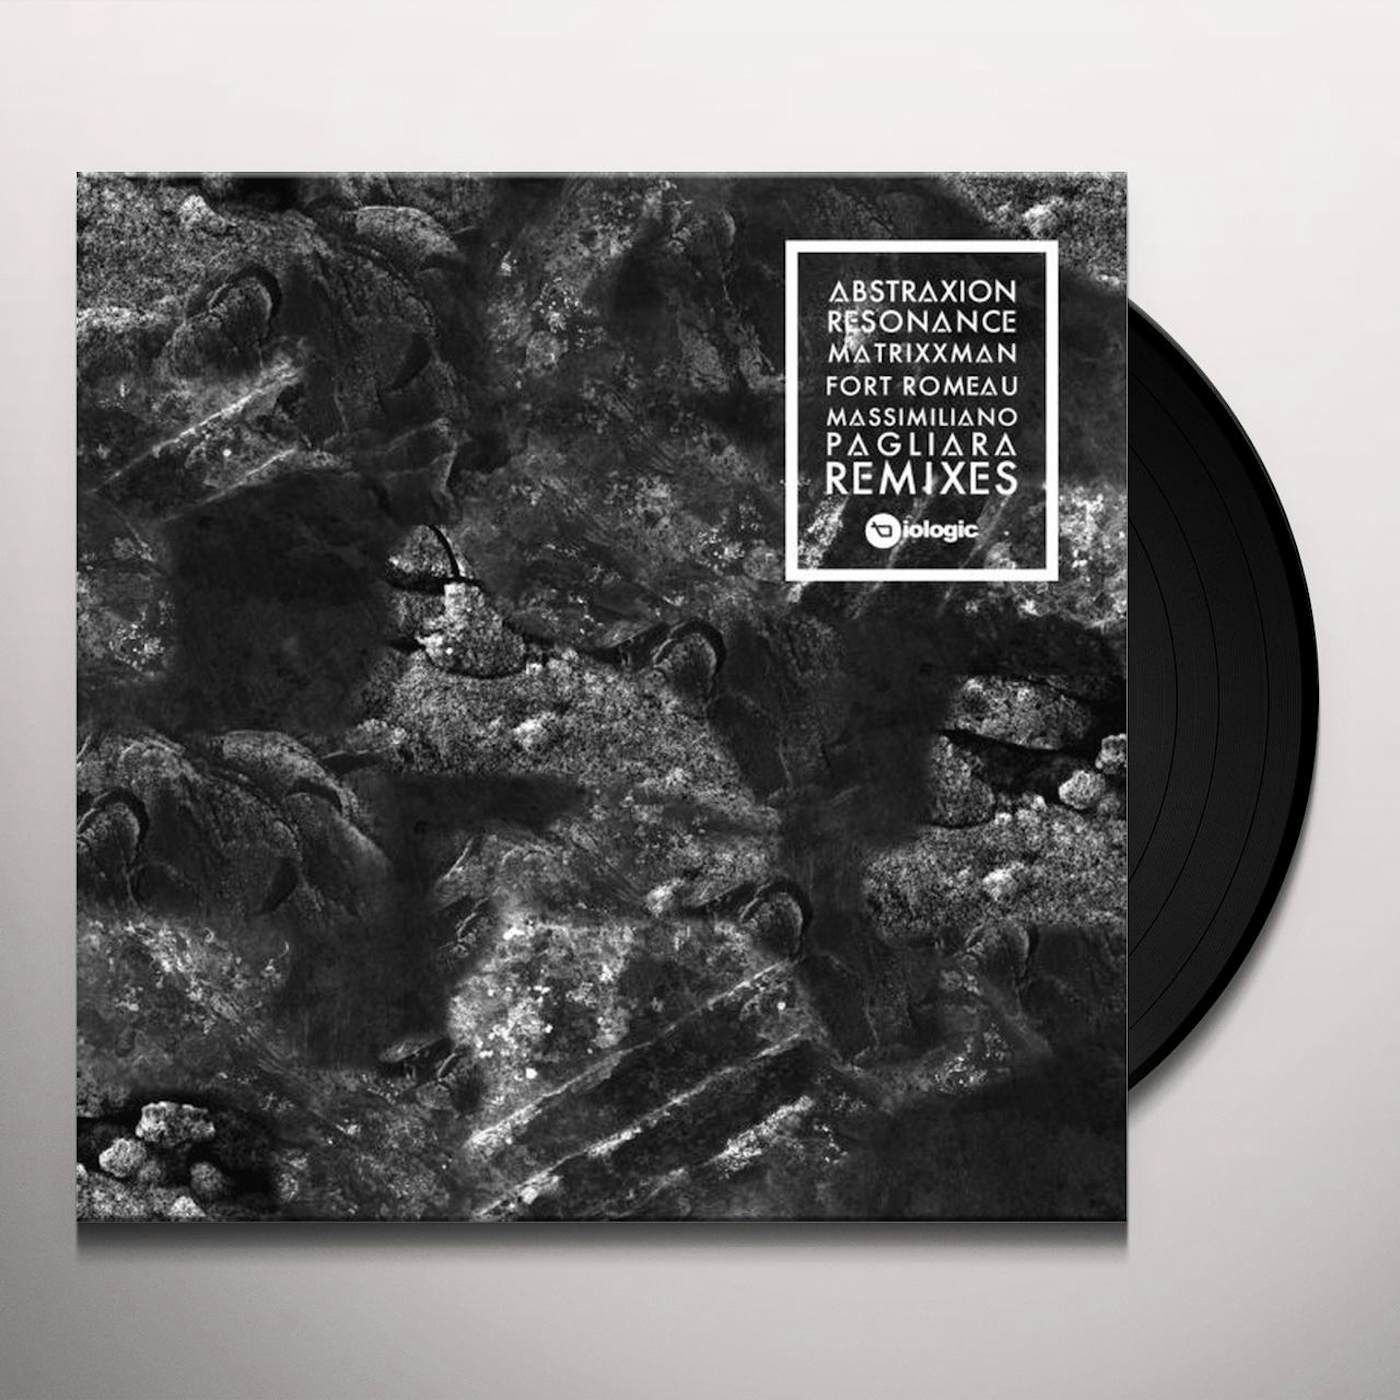 Abstraxion RESONANCE (MATRIXXMAN/FORT ROMEAU/MASSIMILIANO) Vinyl Record